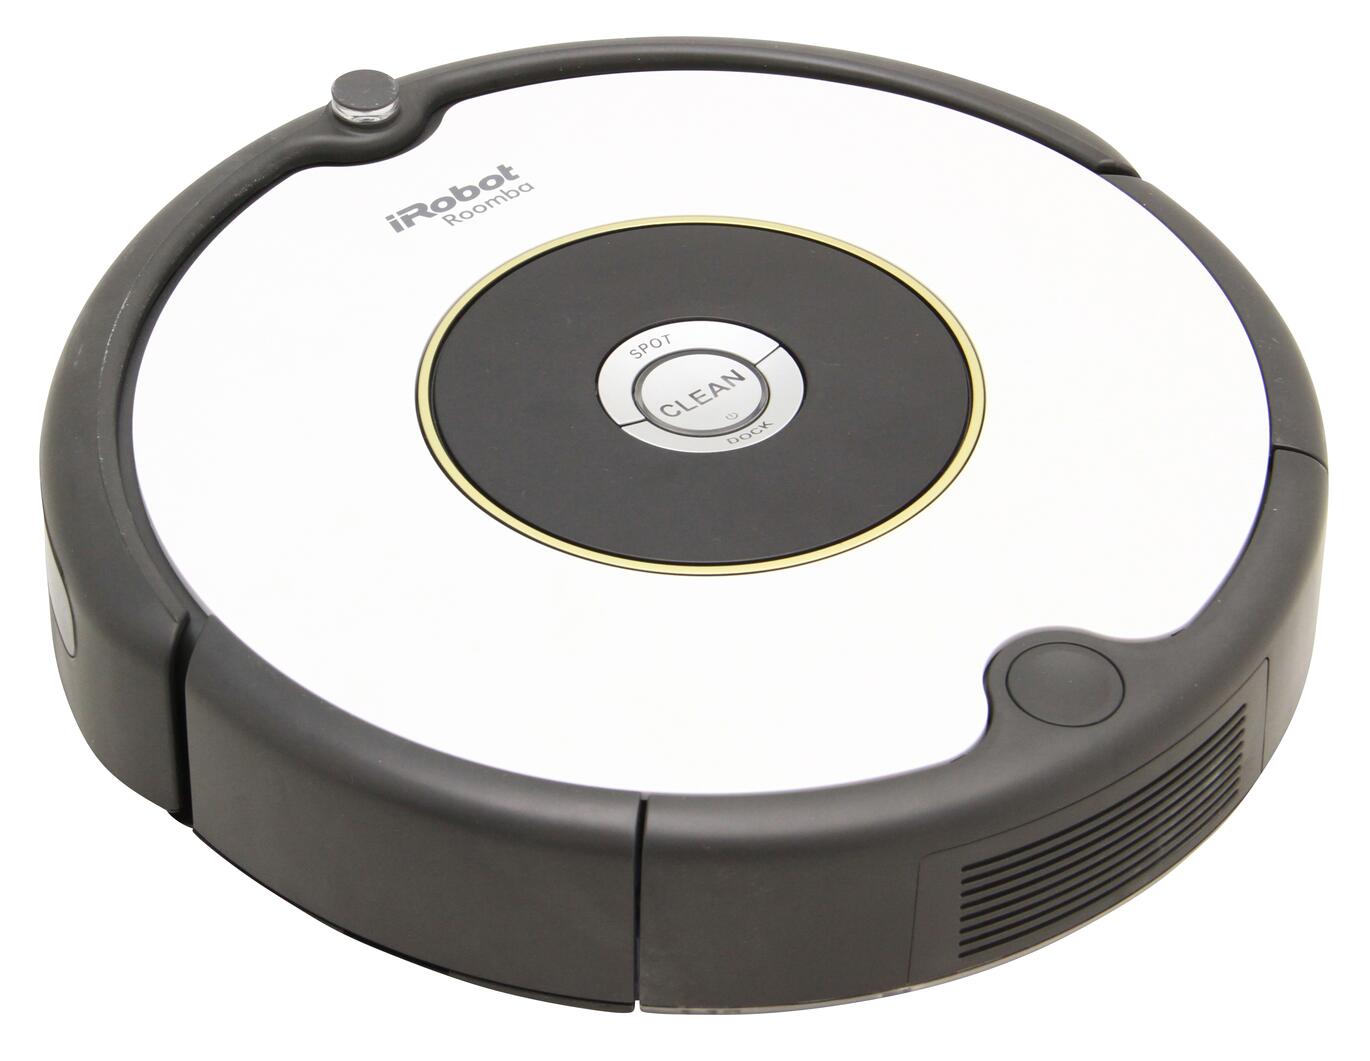 Roomba 605 iRobot